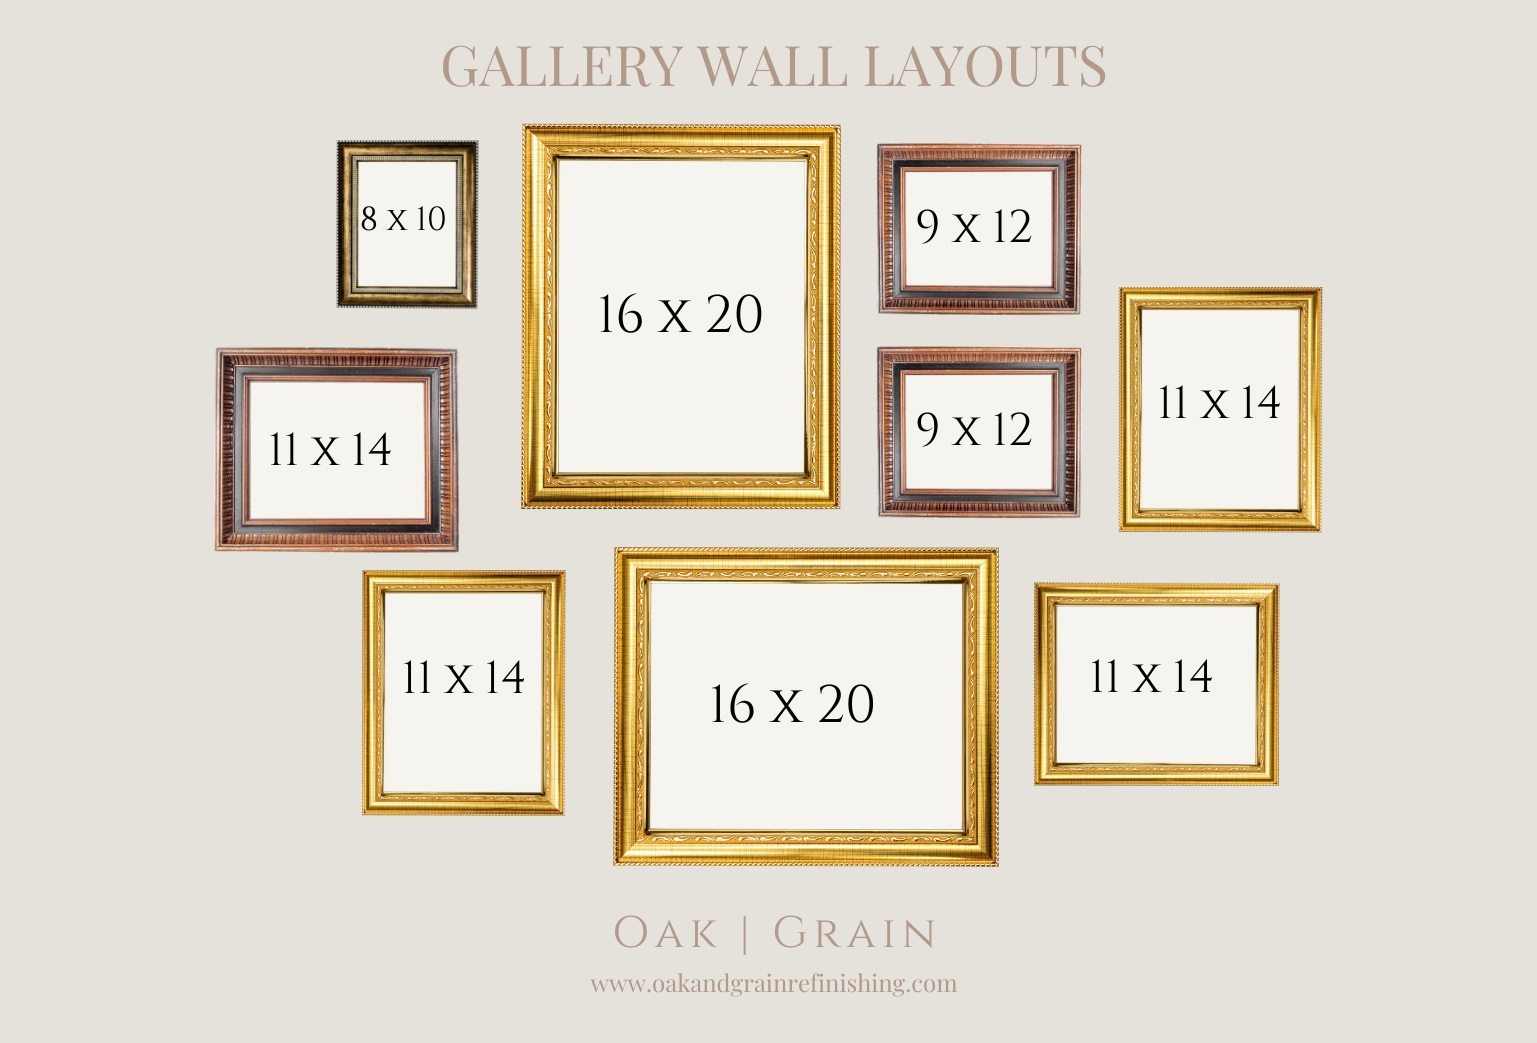 7 Gallery Wall Layouts Guaranteed to Impress